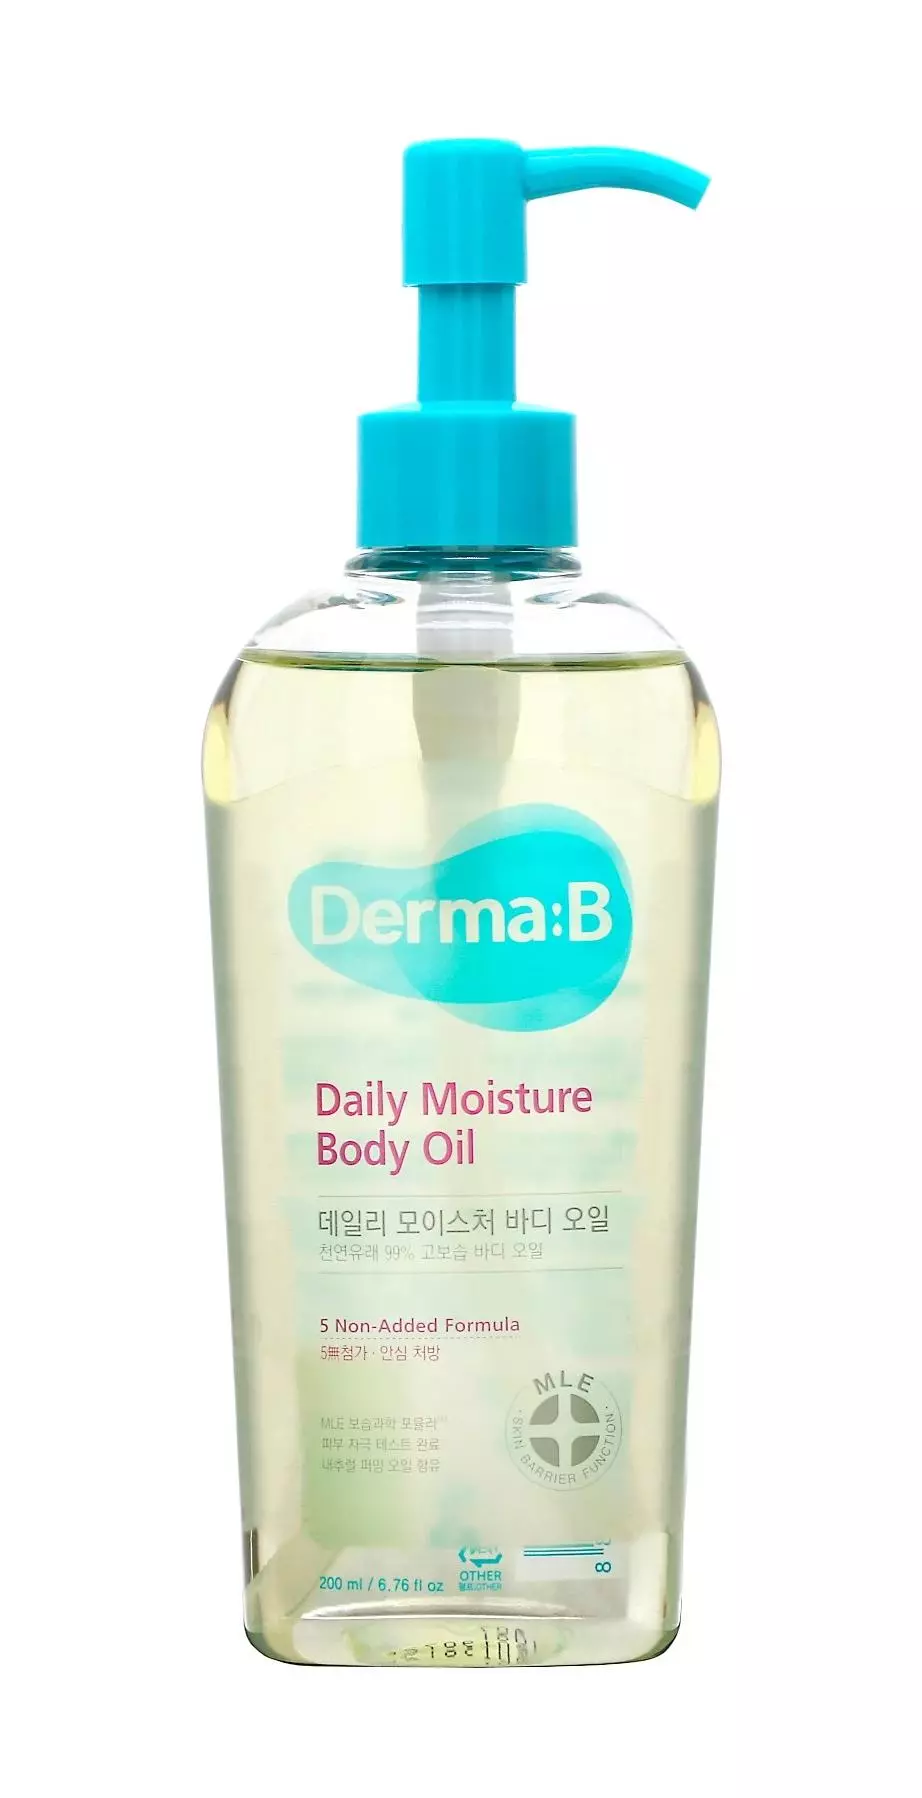 Daily Moisture Body Oil в интернет-магазине Skinly